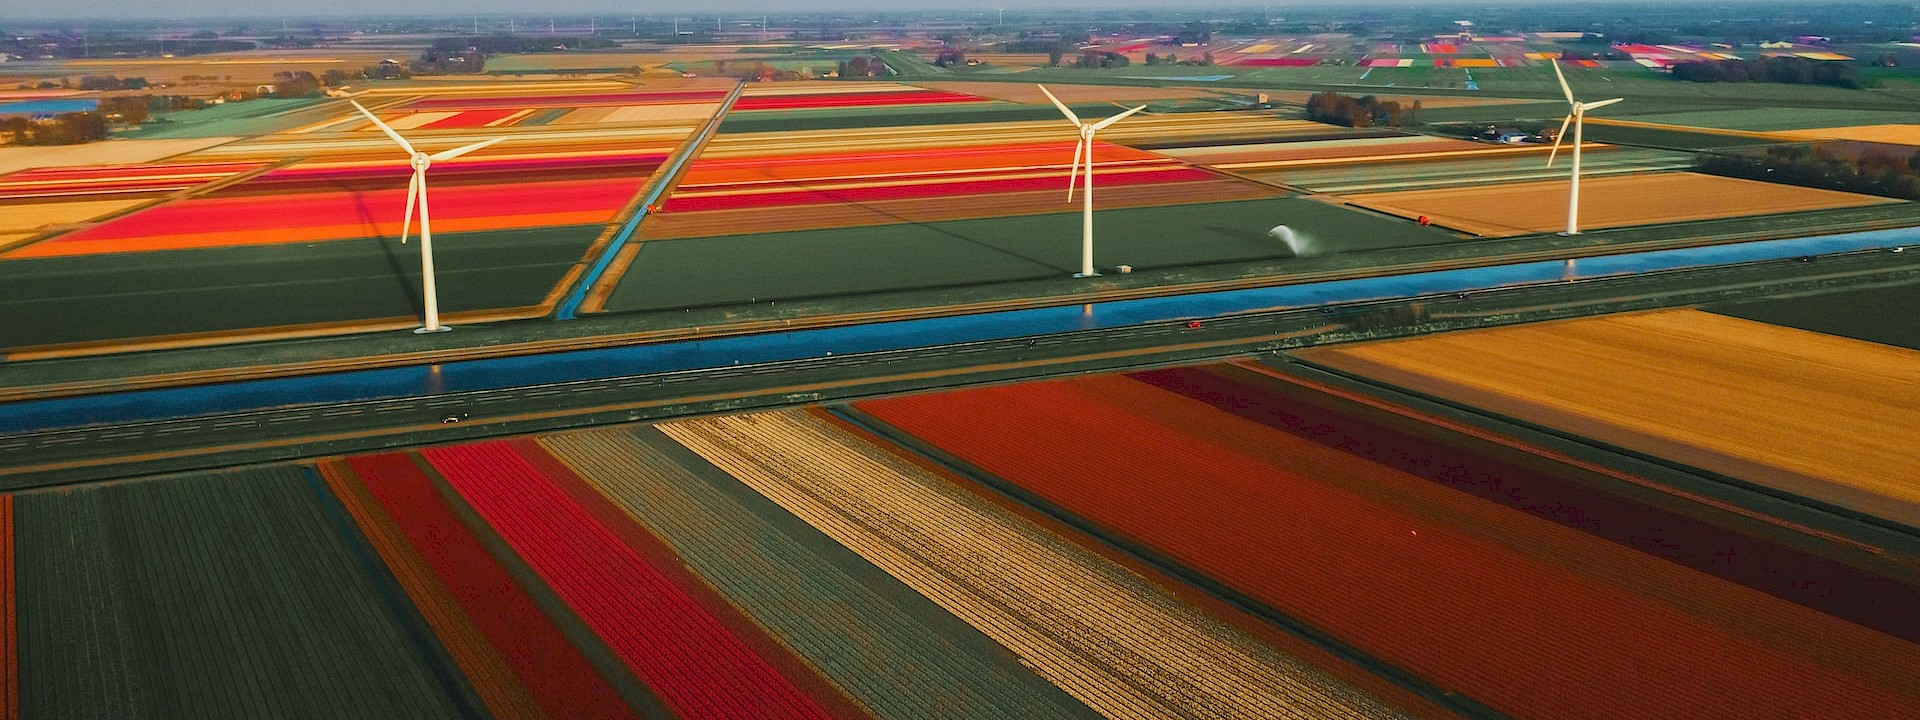 Tulip fields in the Netherlands. Photo: redcharlie1